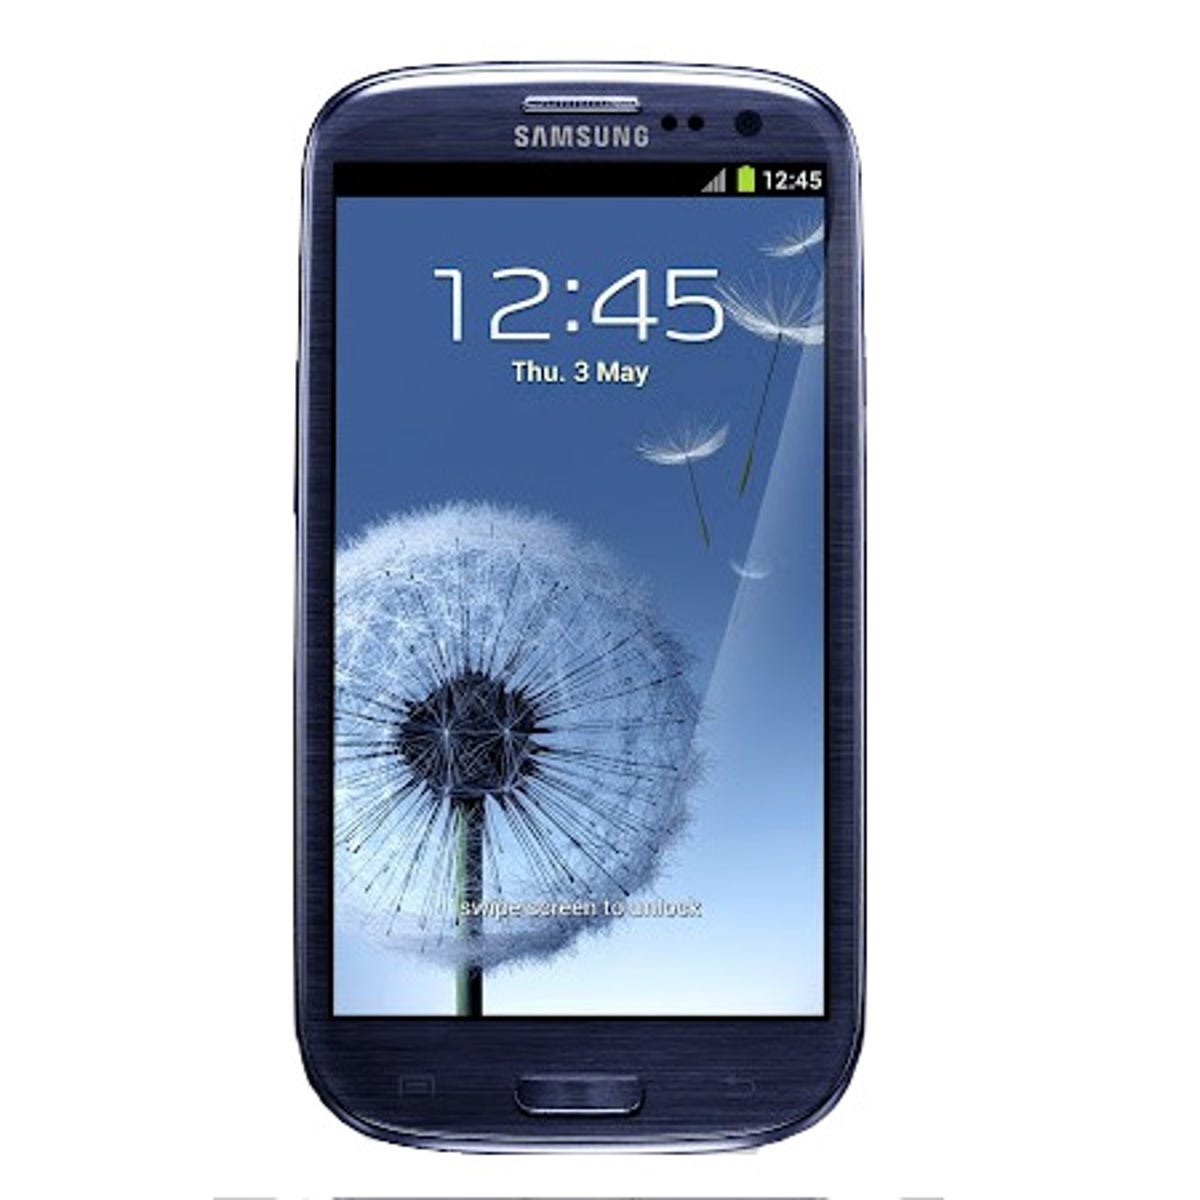 Galaxy S Galaxy S III - CNET